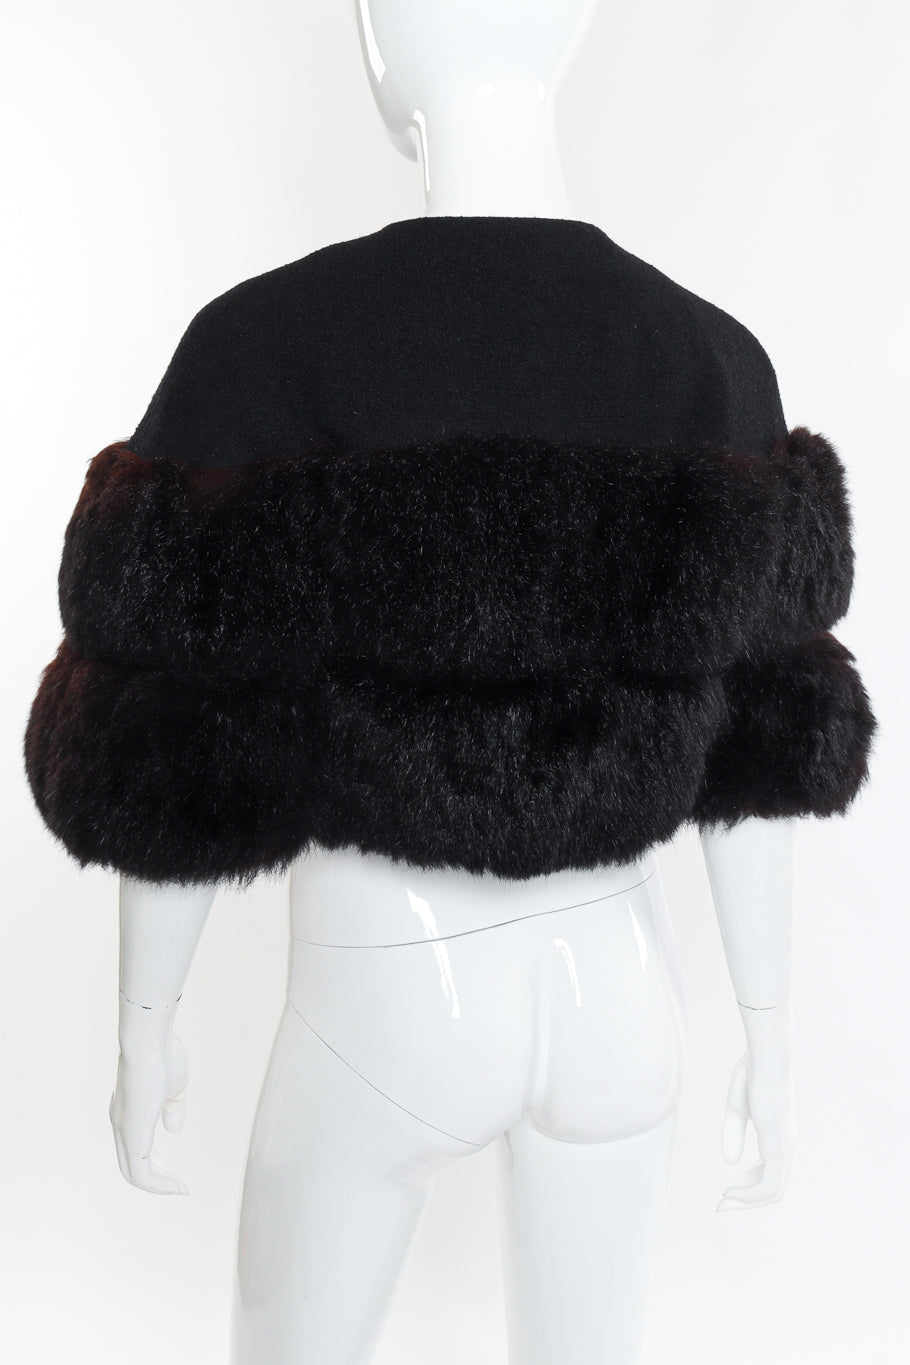 Vintage Pauline Trigere Cropped Fur Jacket back on mannequin closeup @recessla